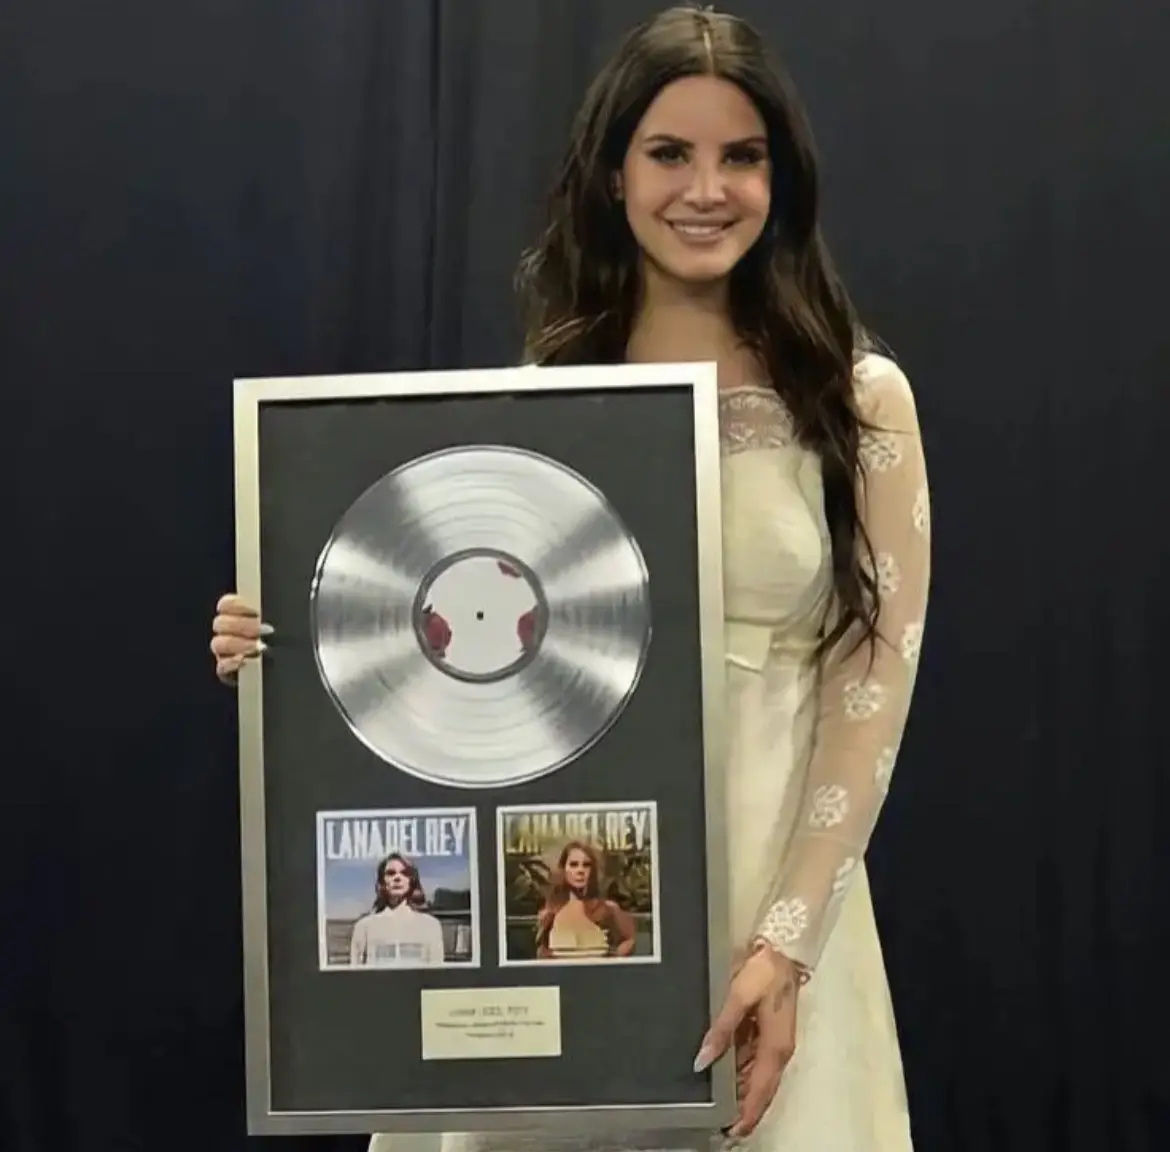 Album Review: Listeners Latch Onto Lana Del Rey's Lyricism on Her